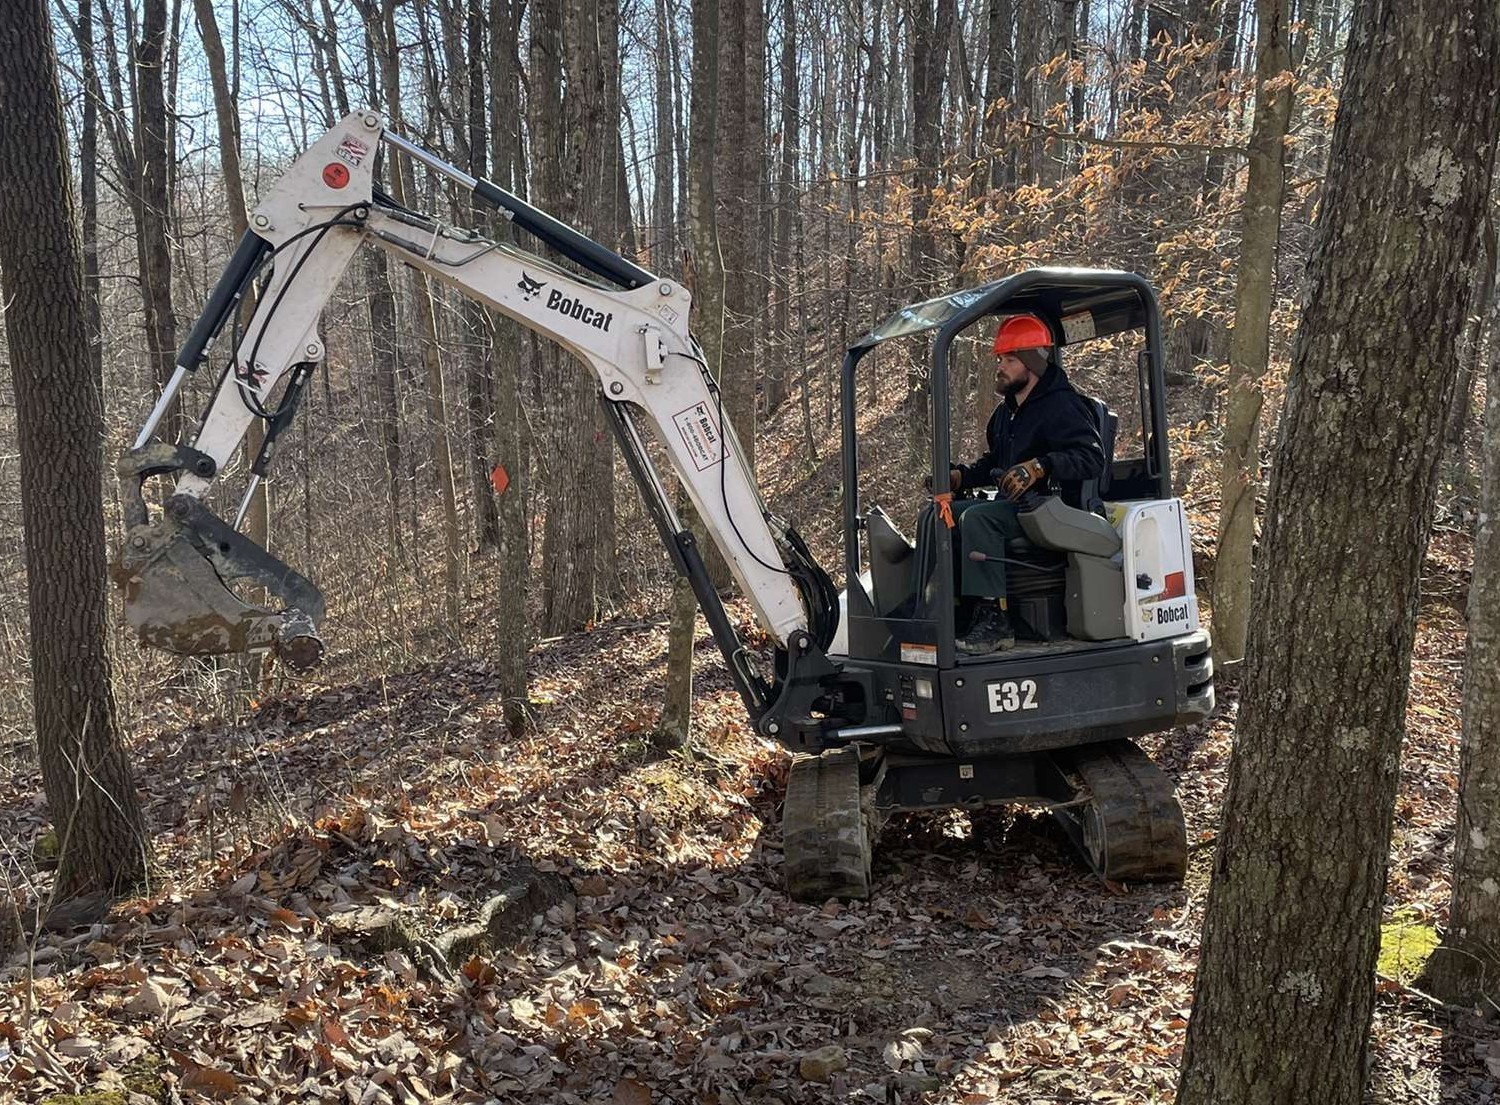 Dalton using Mini crane machine to clear brush and debris in the forest